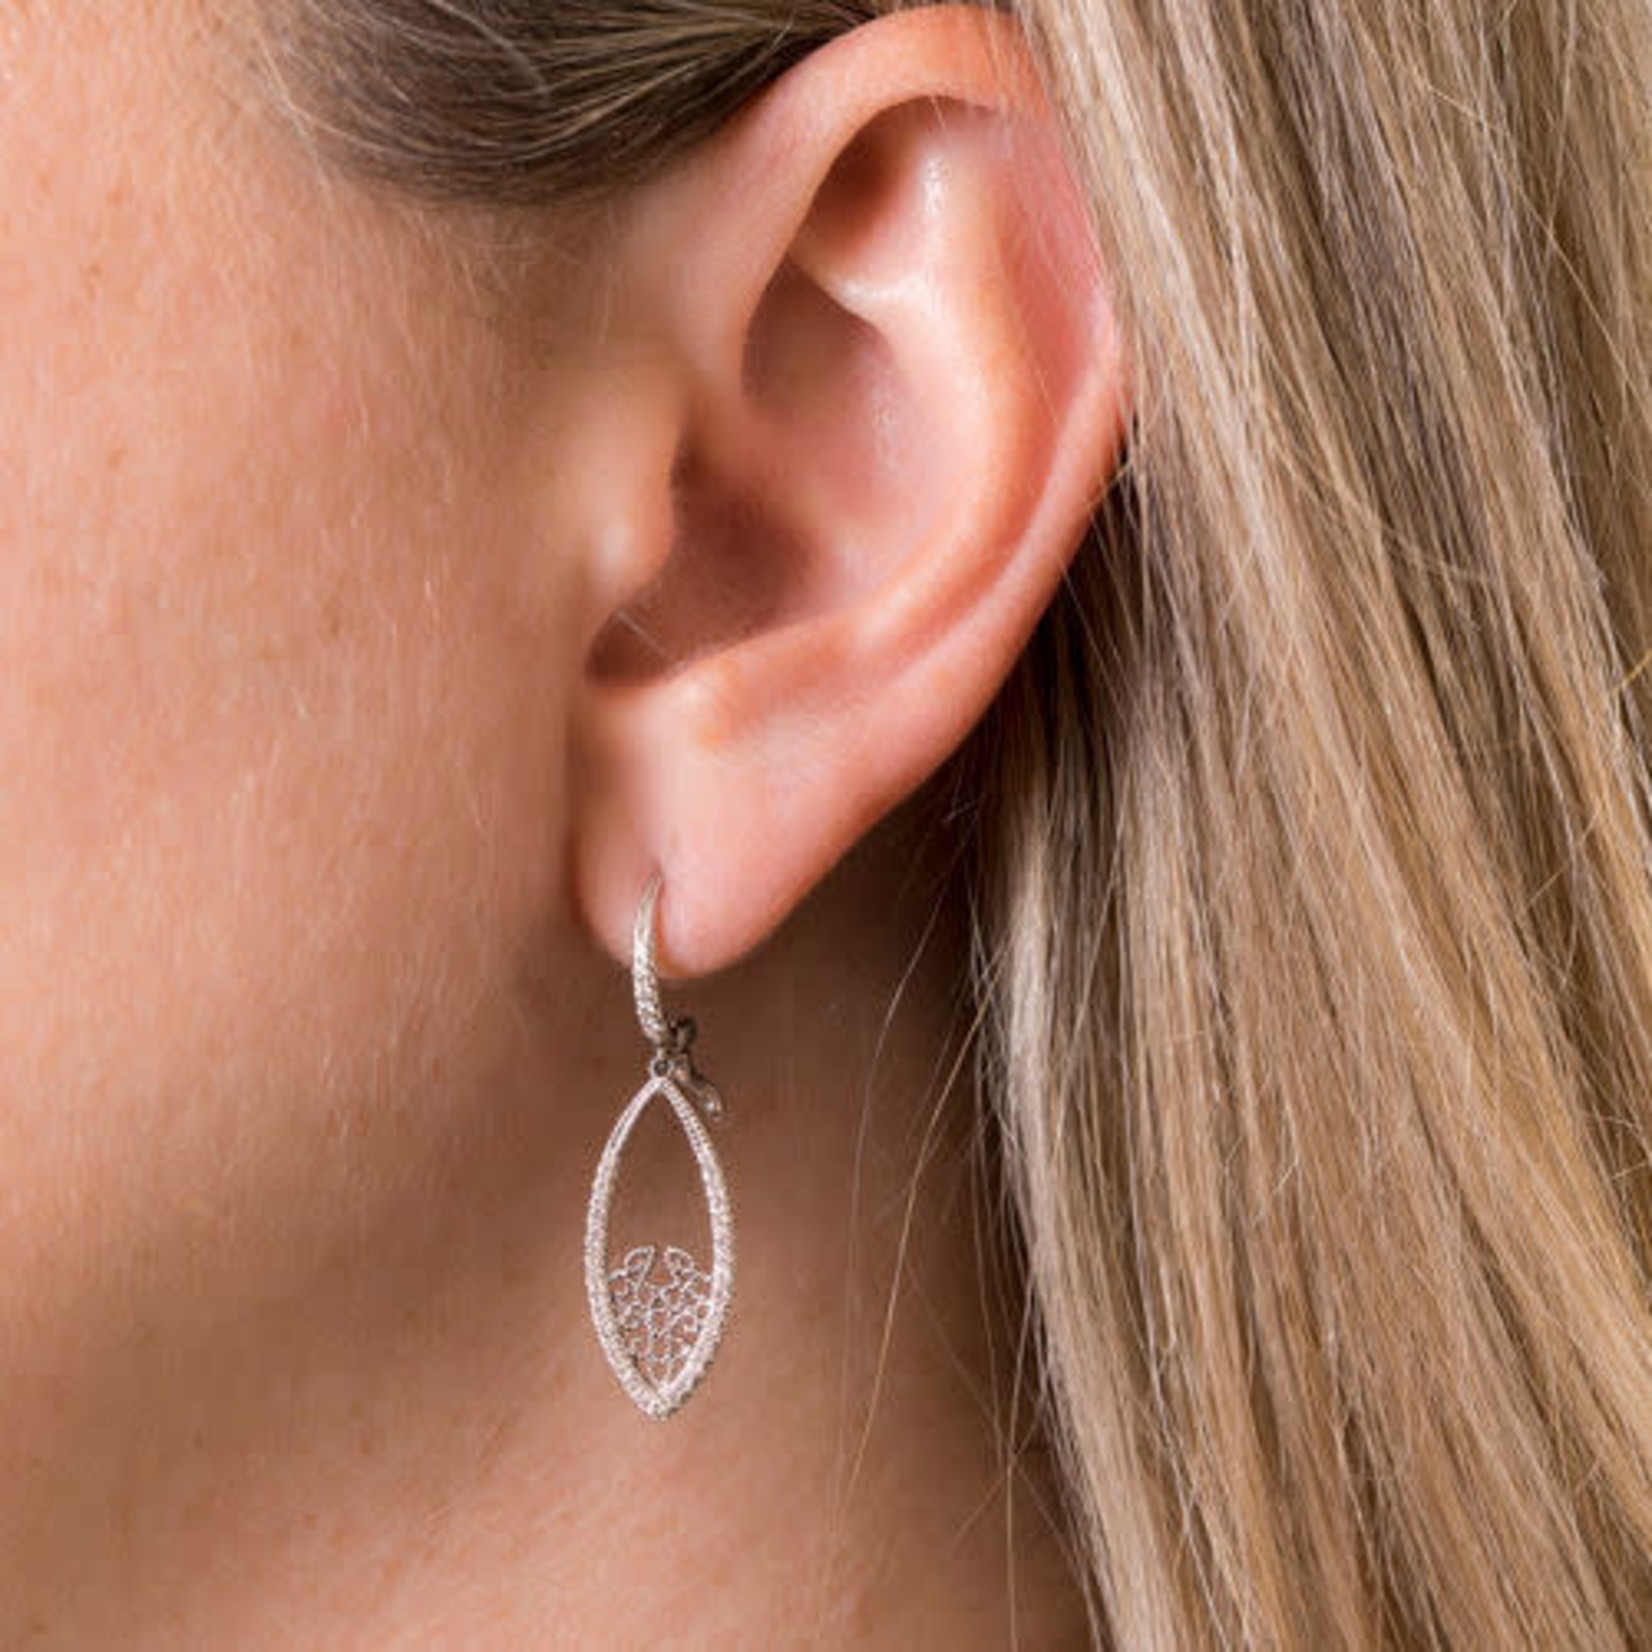 14K White Gold Diamond Filigree Lace Drop Earrings